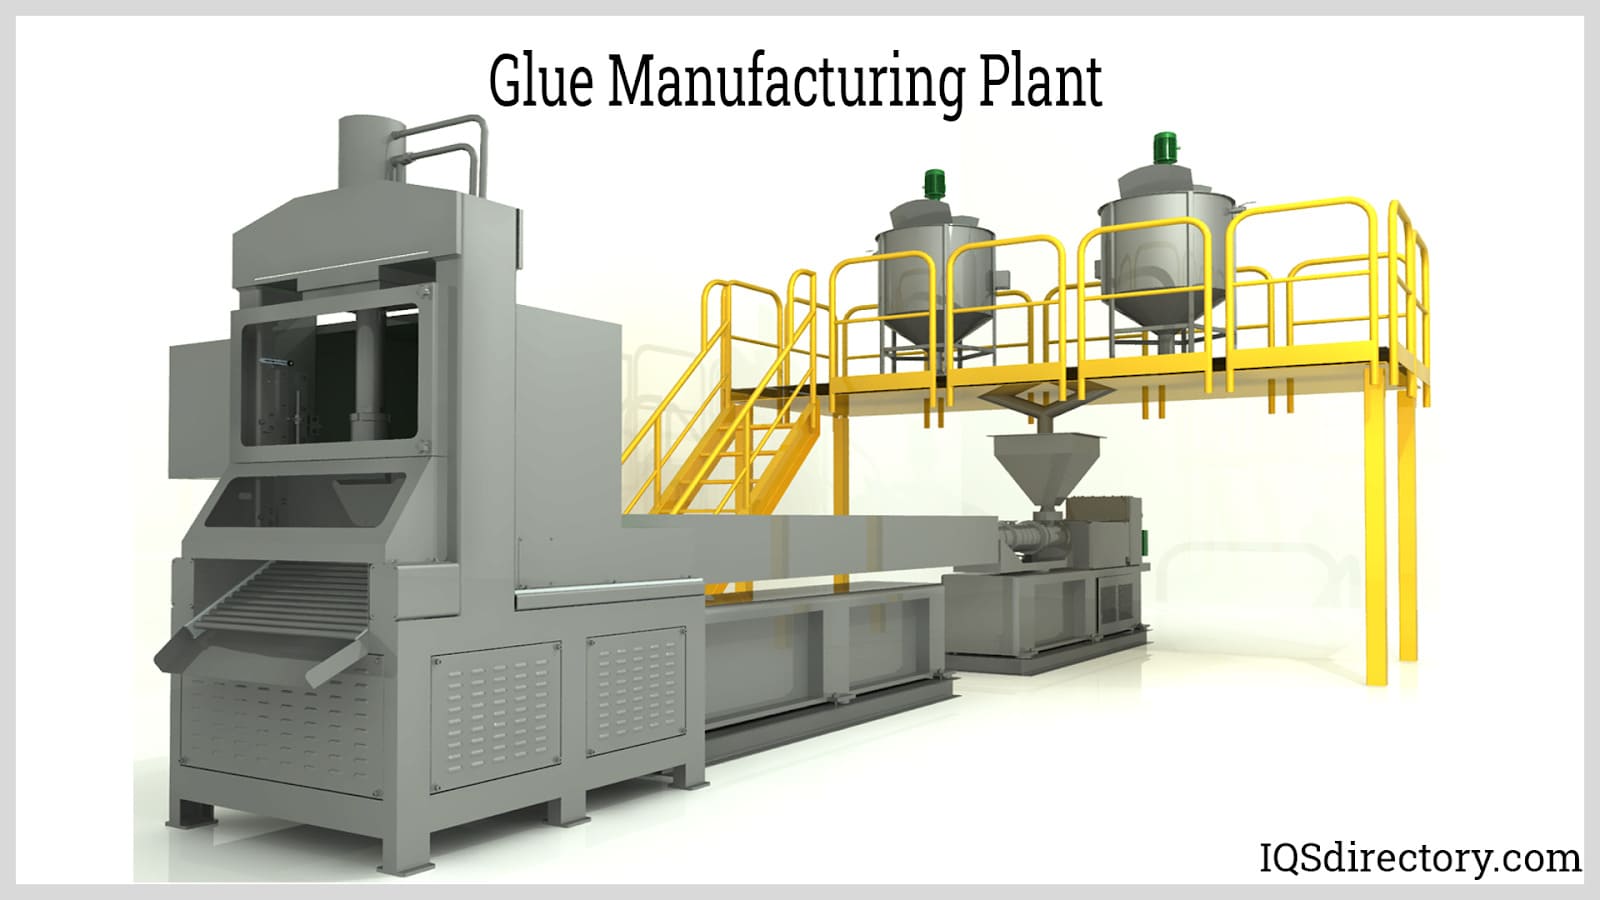 Glue Manufacturing Plant